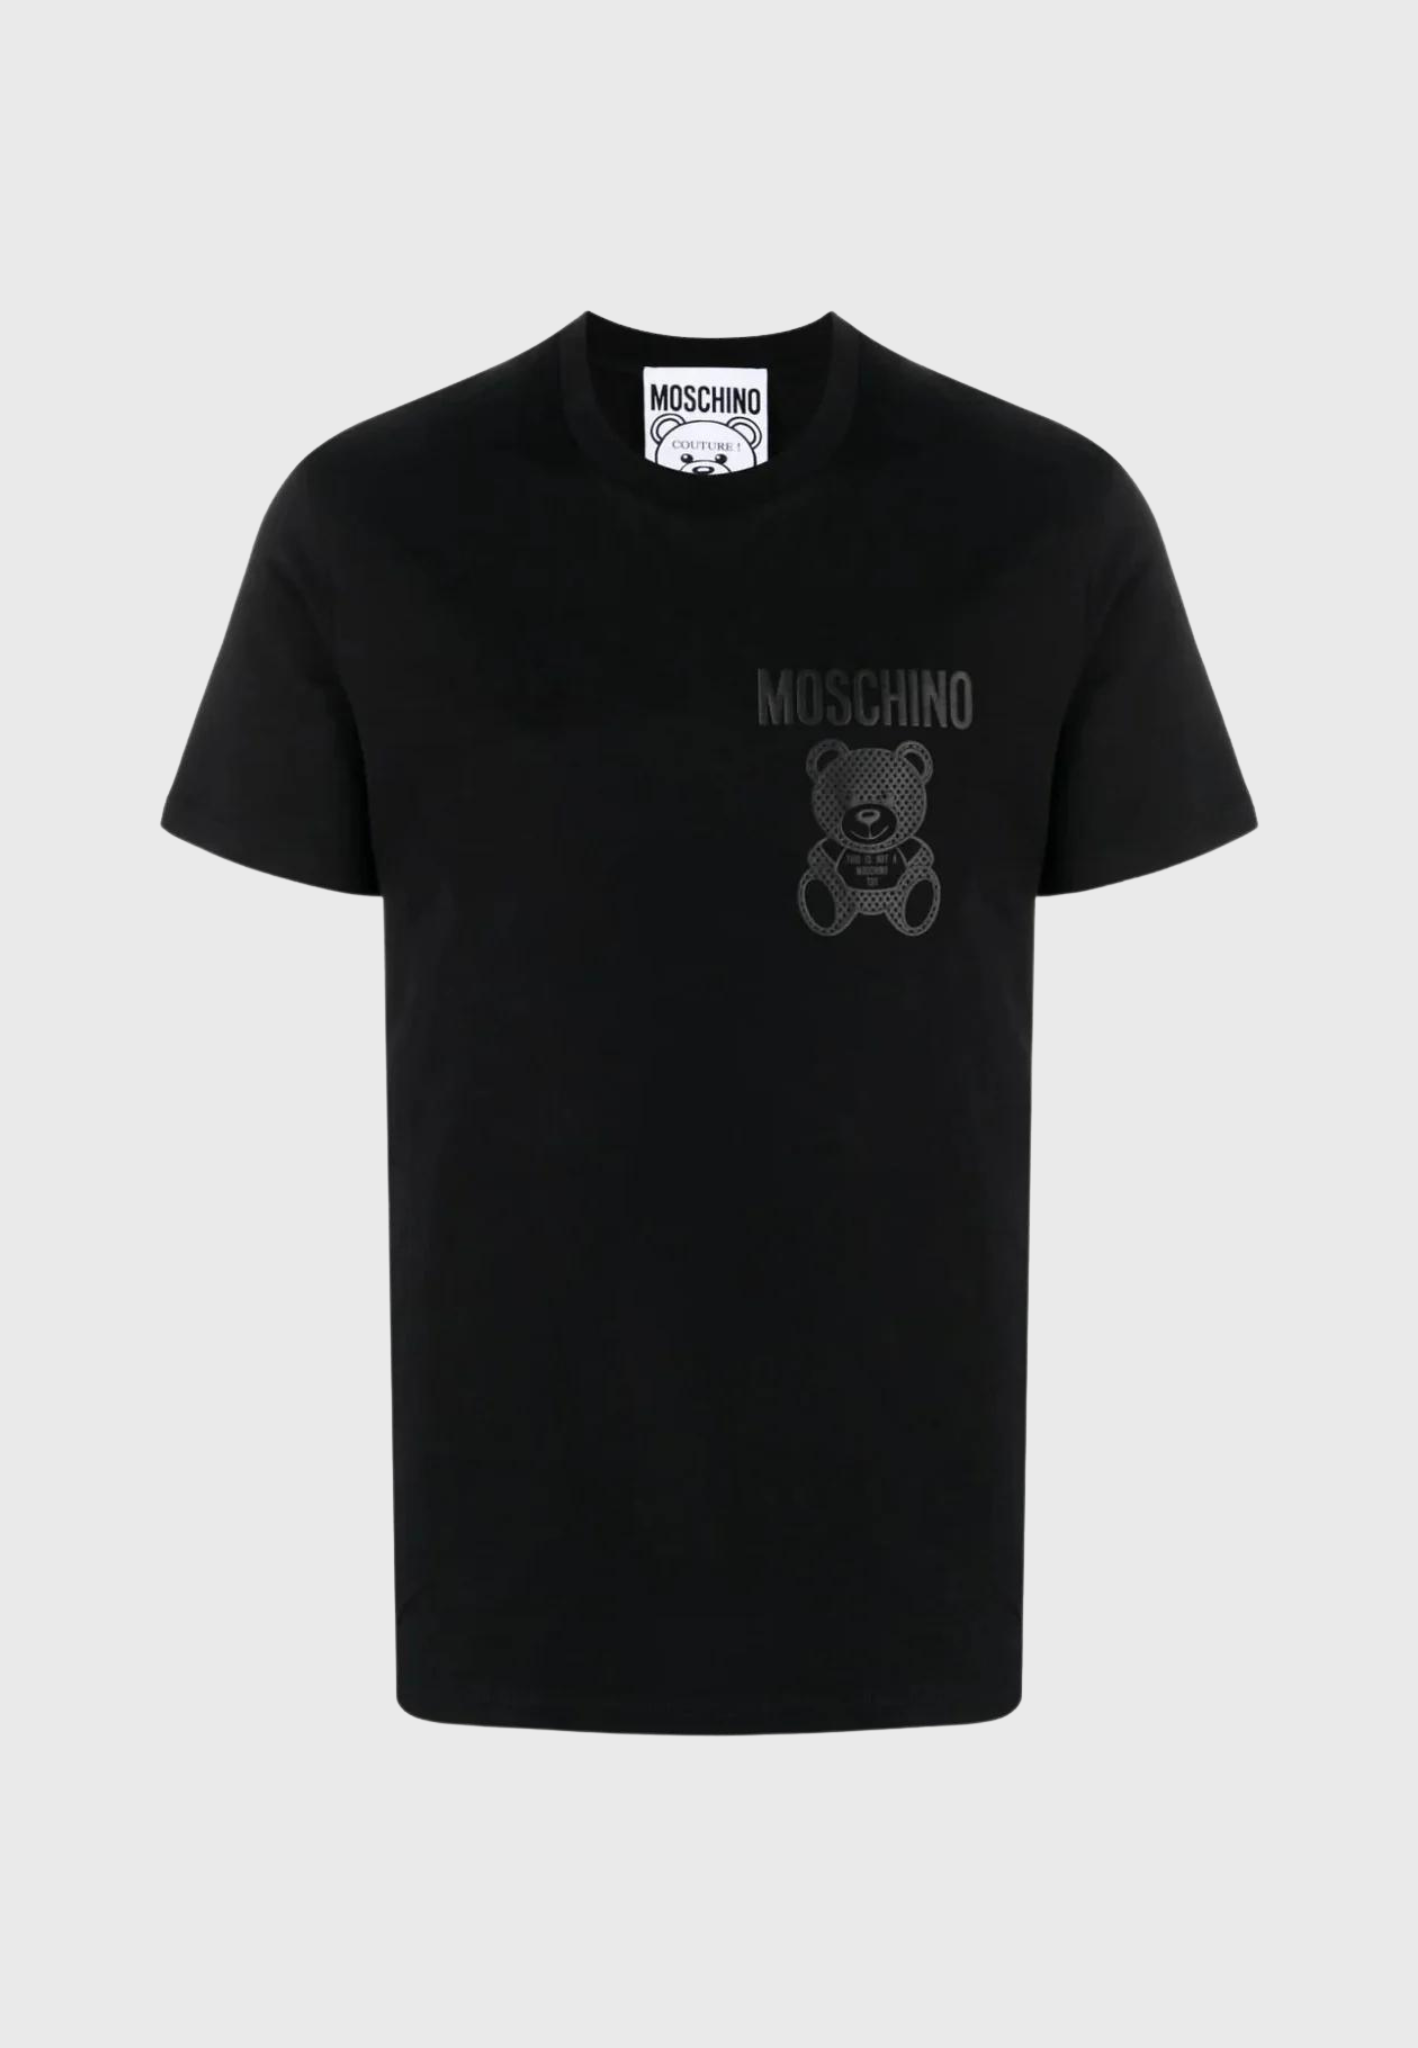 Moschino Teddy T-Shirt  V0729-2041